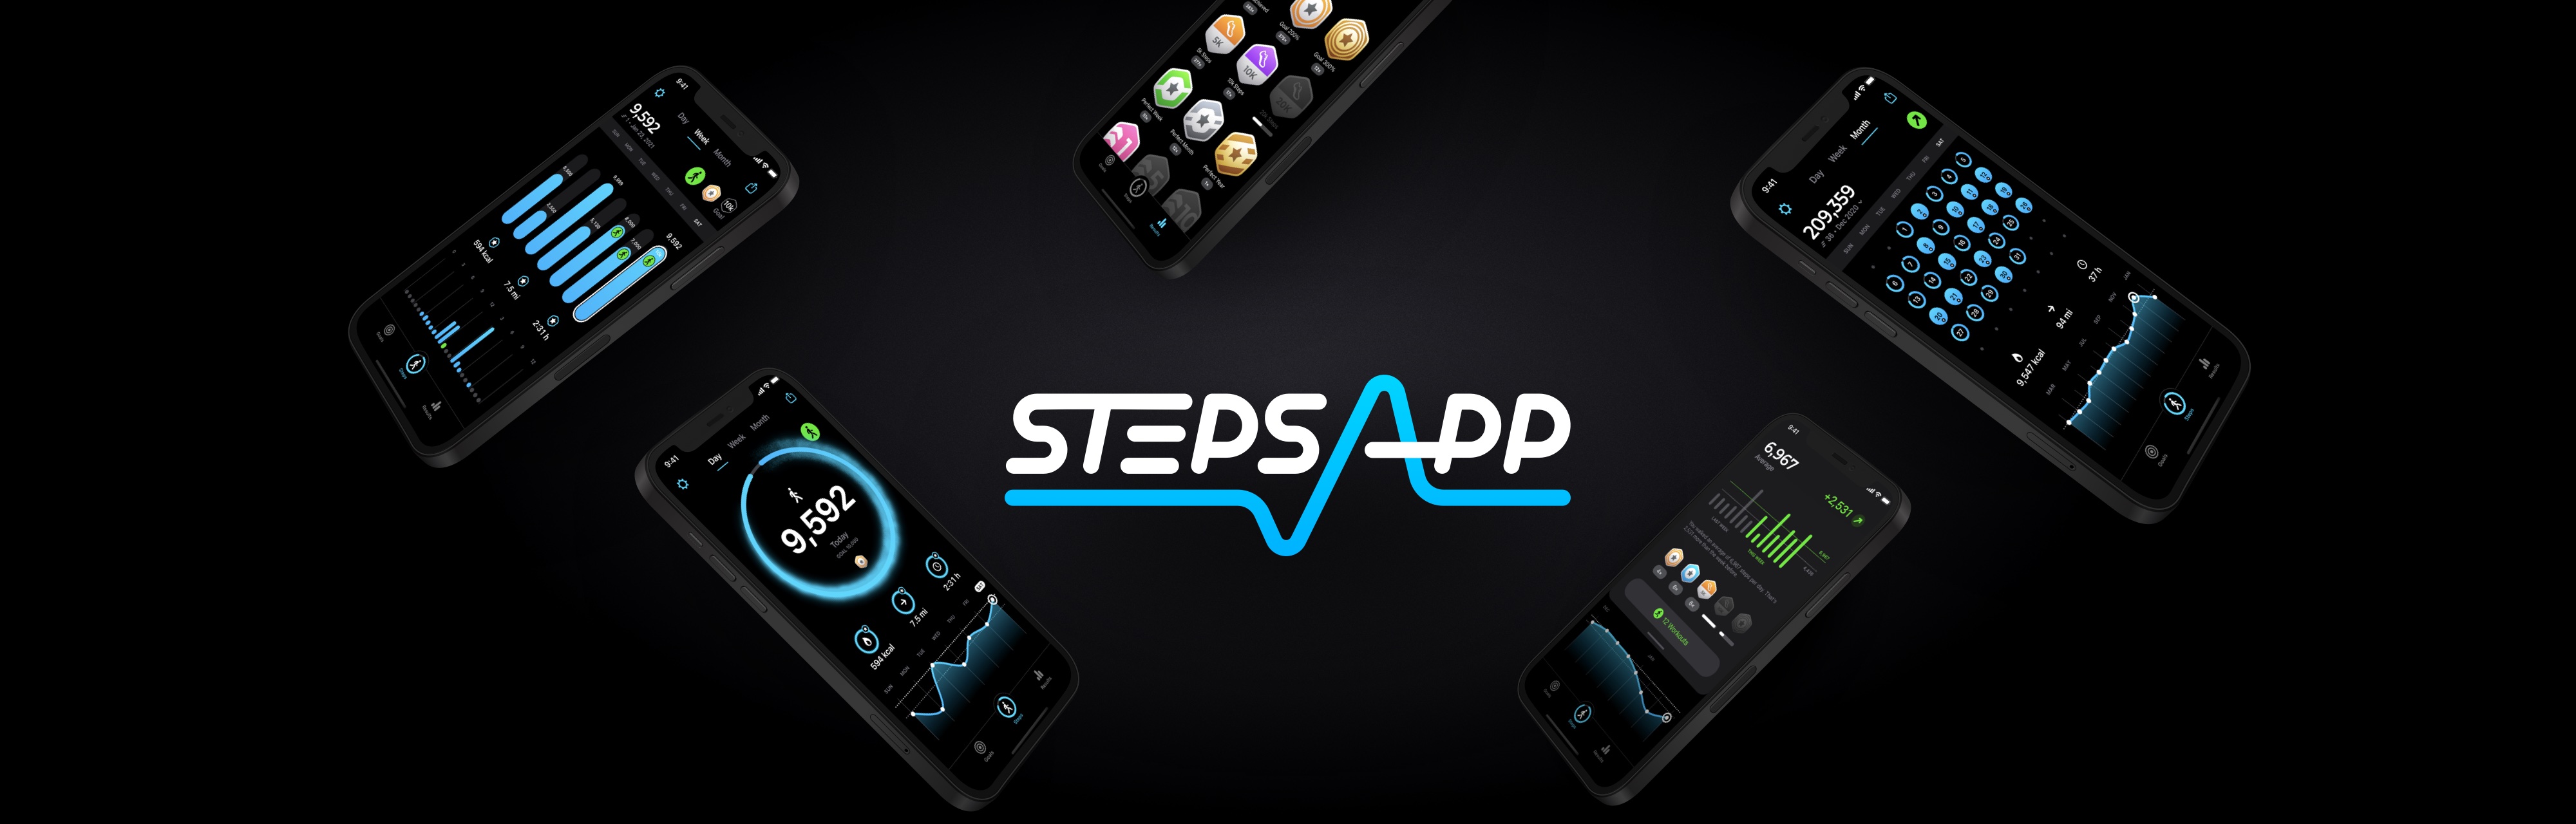 (c) Steps.app